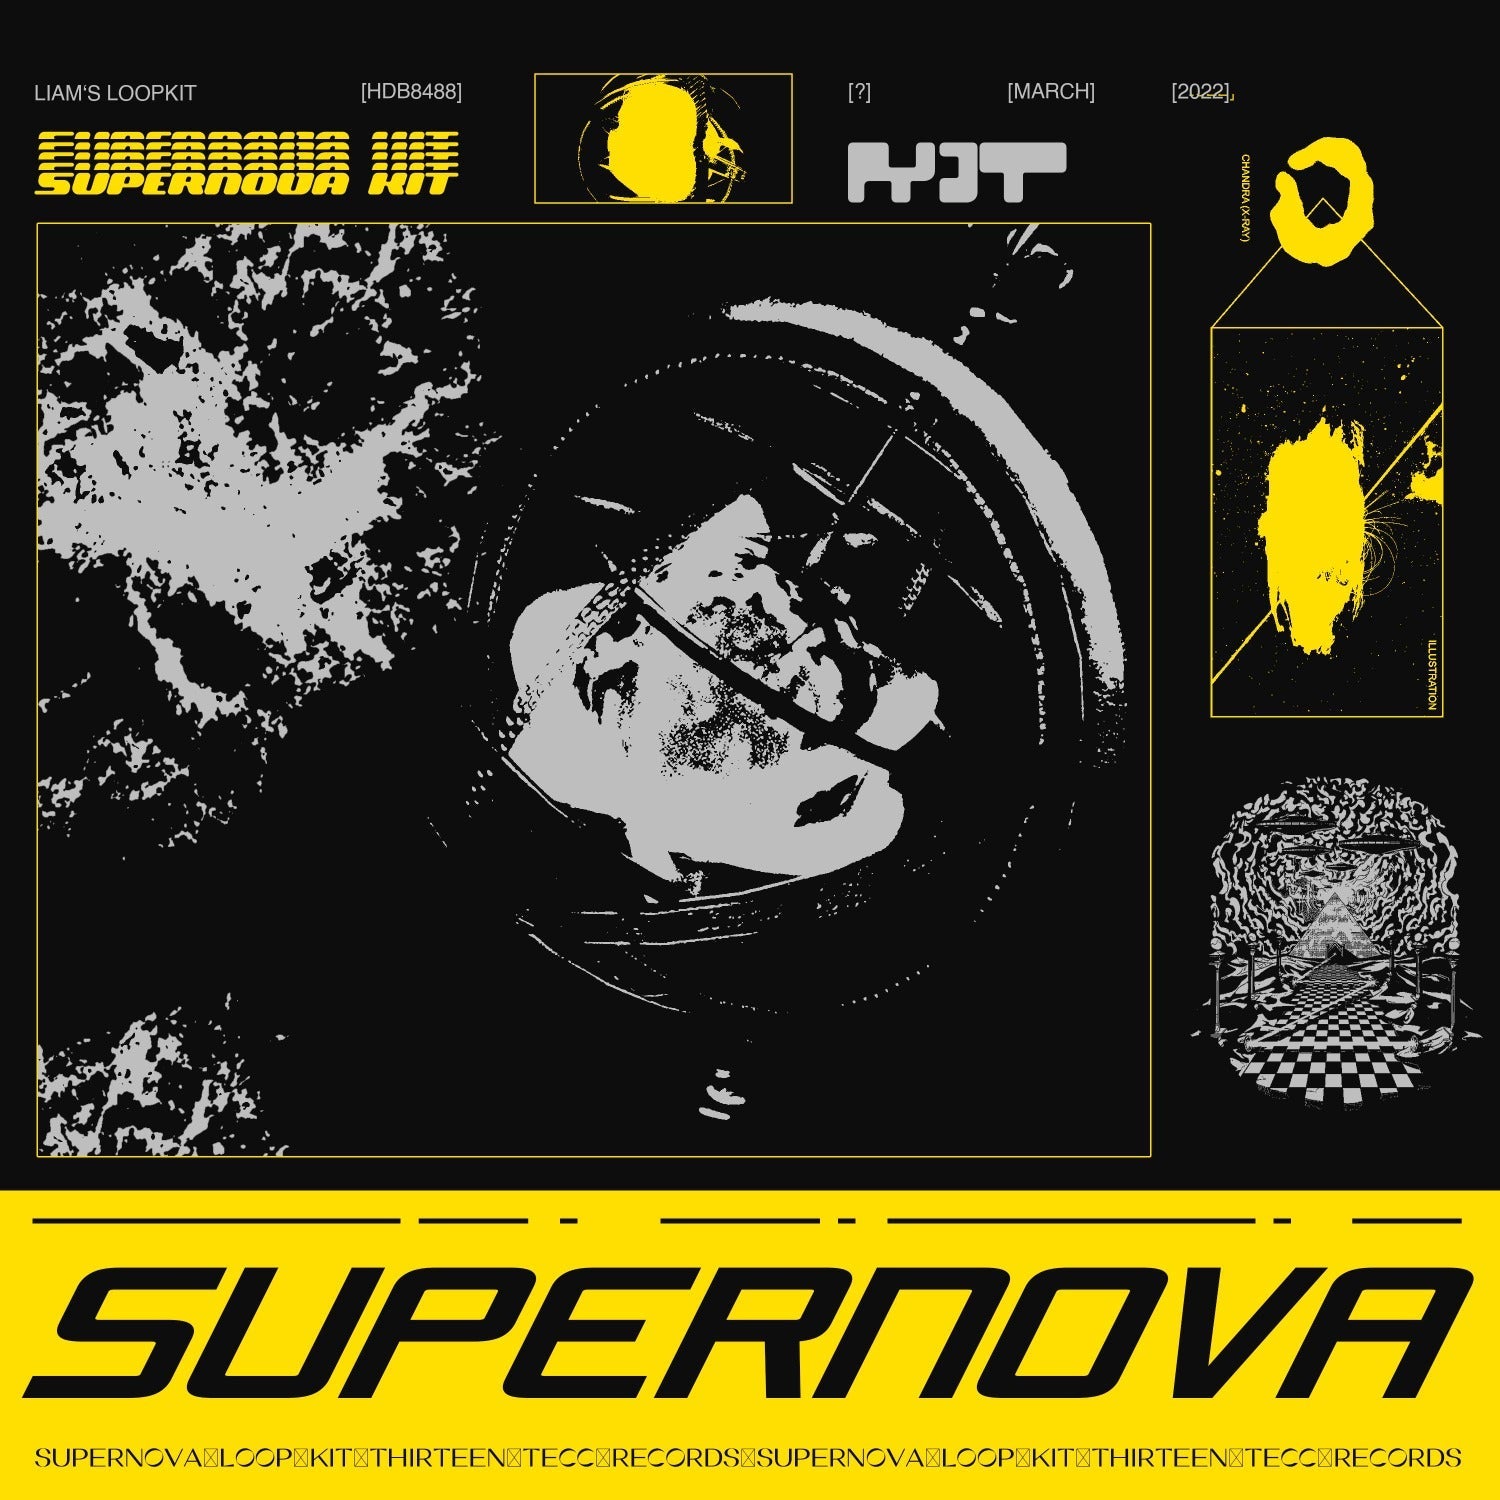 Super nova Loop/Midi Kit - Thirteen Tecc Records